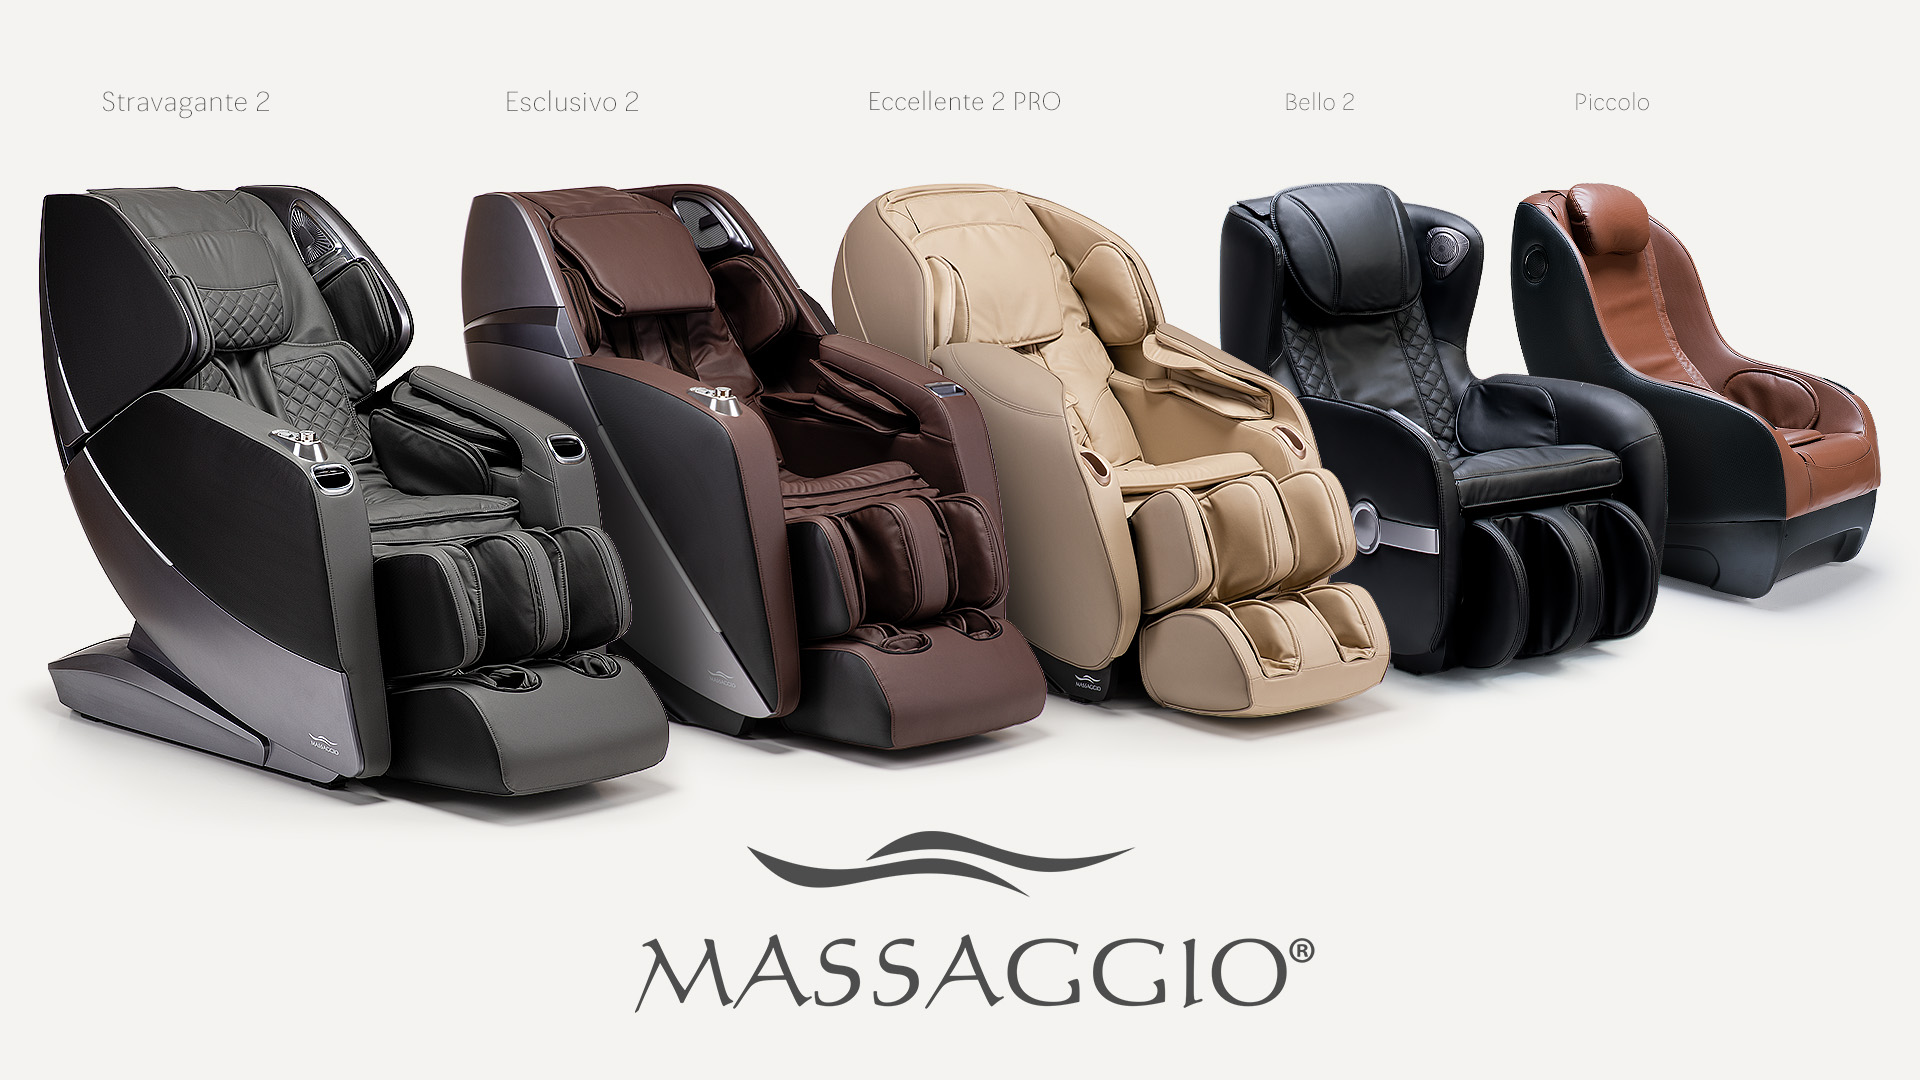 Massaggio massage chairs